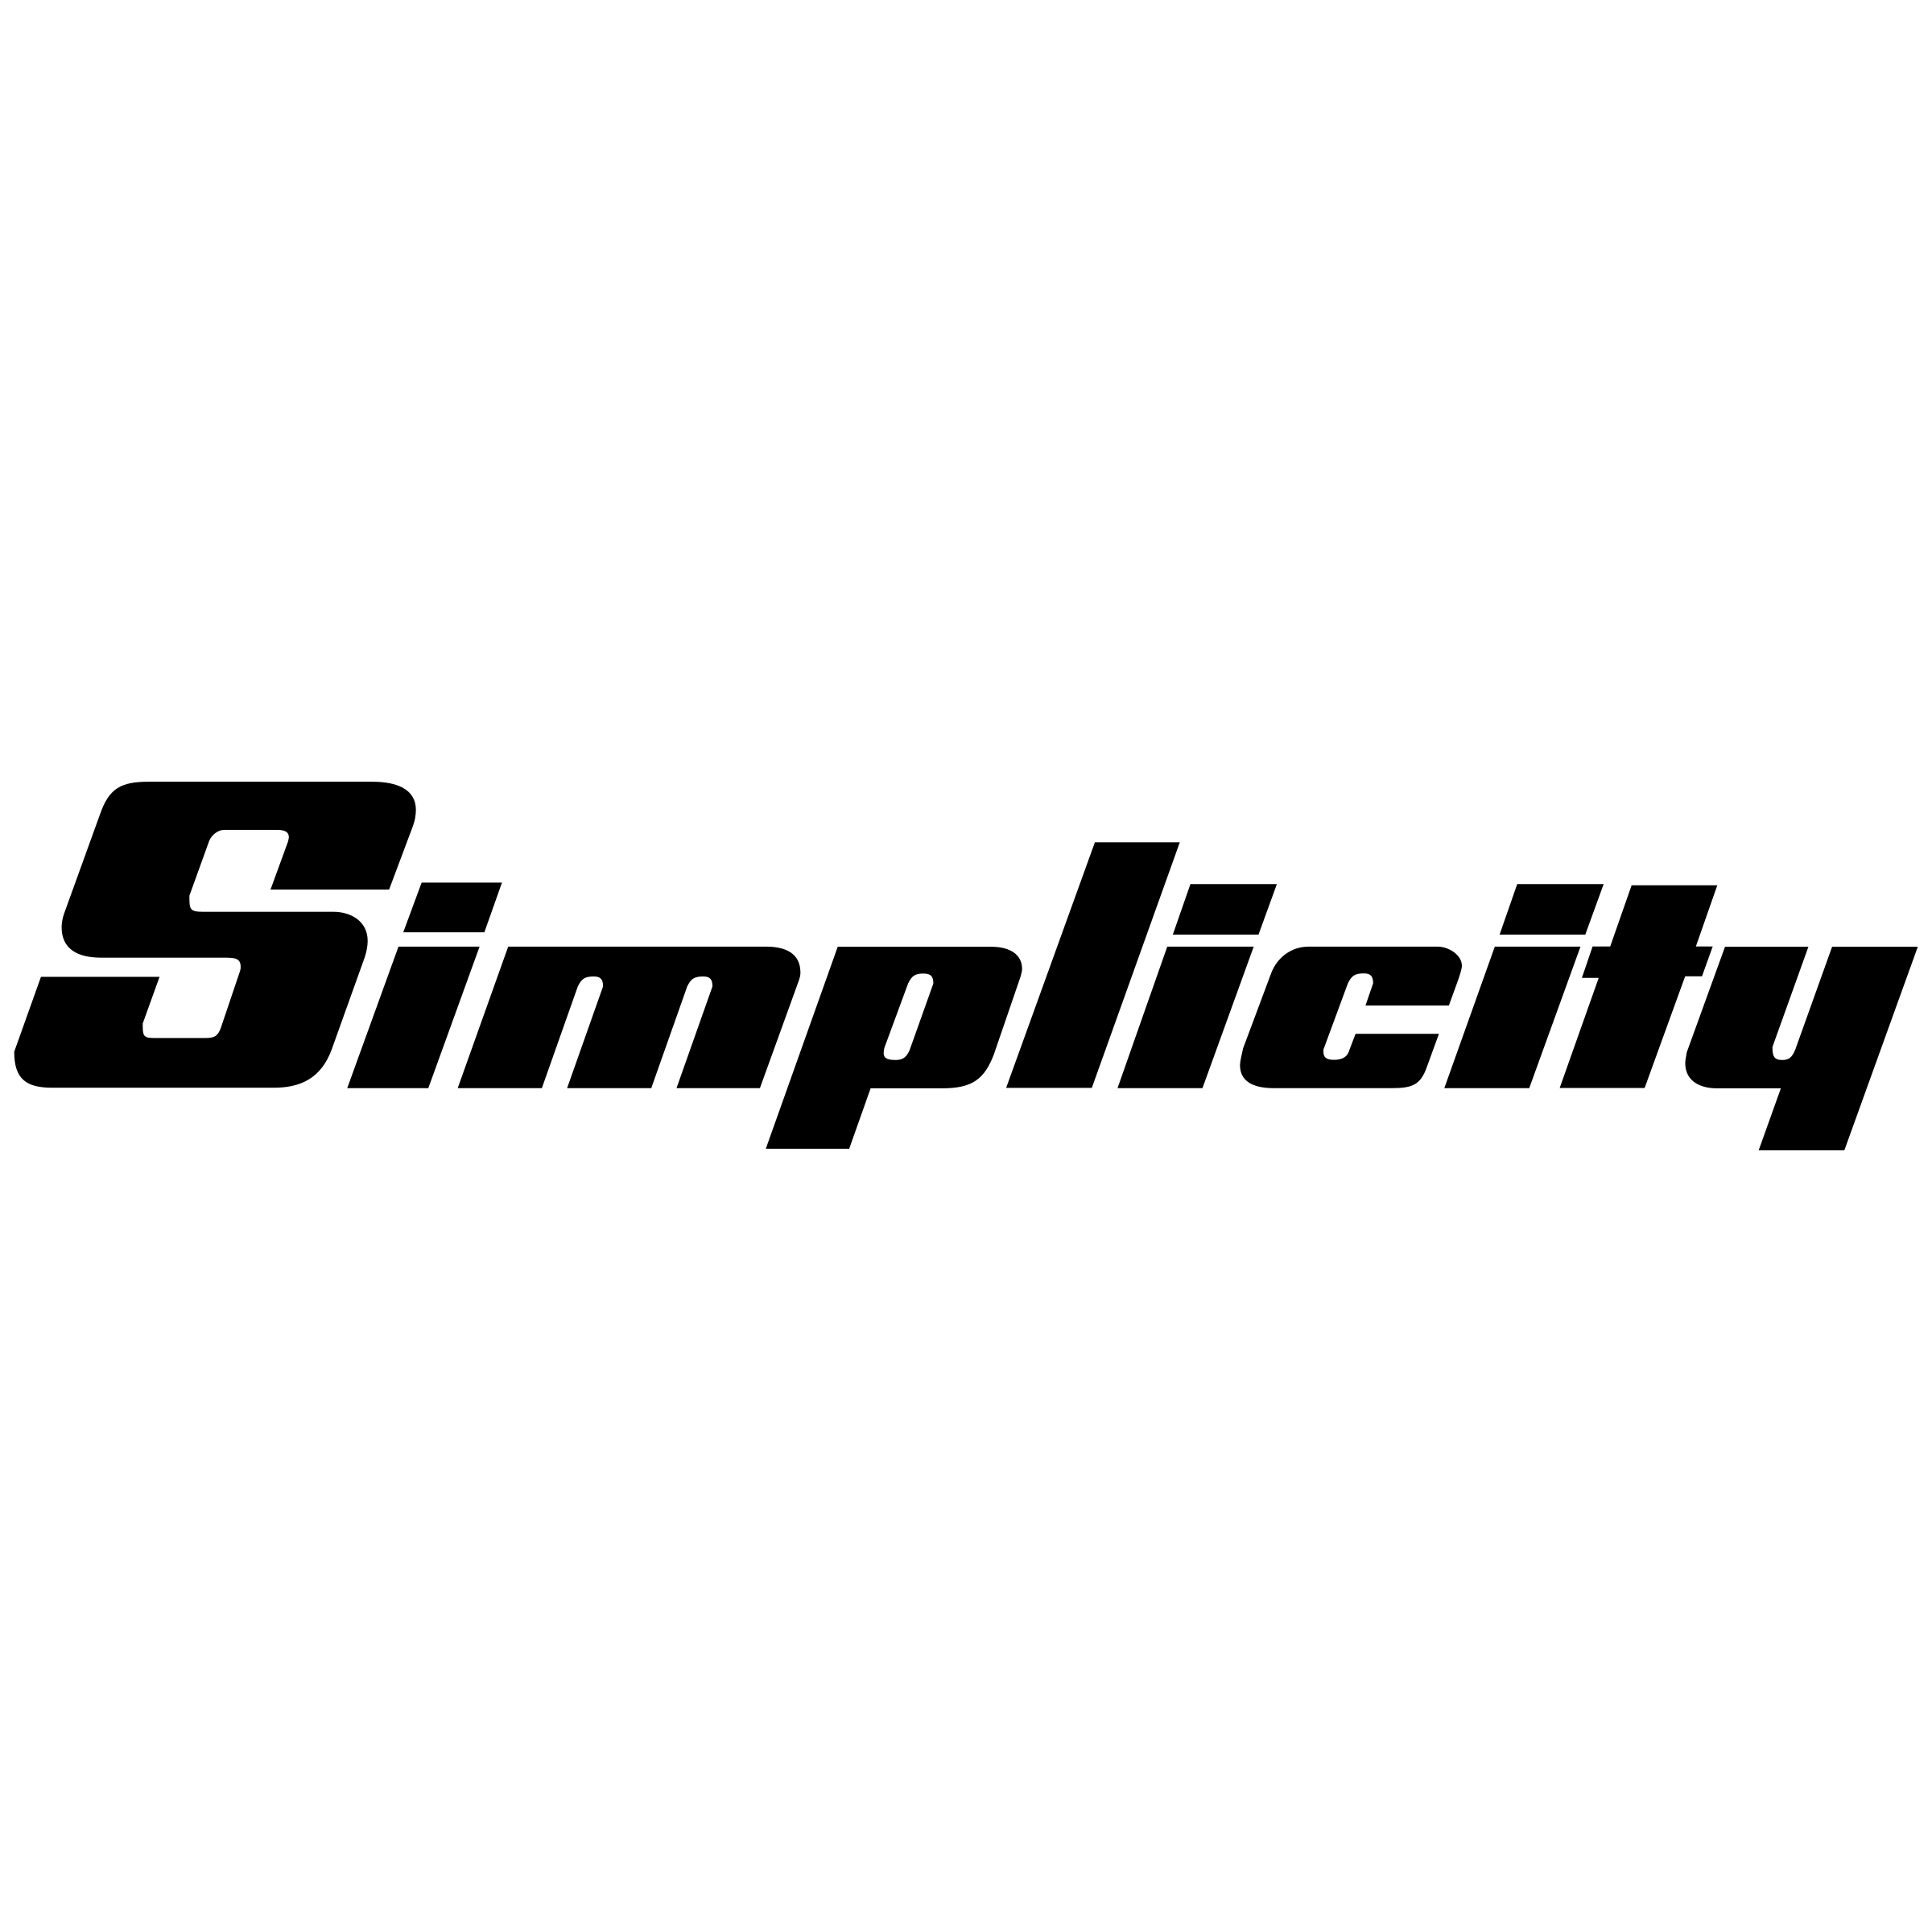 Simplicity Logo - Simplicity Logo PNG Transparent & SVG Vector - Freebie Supply